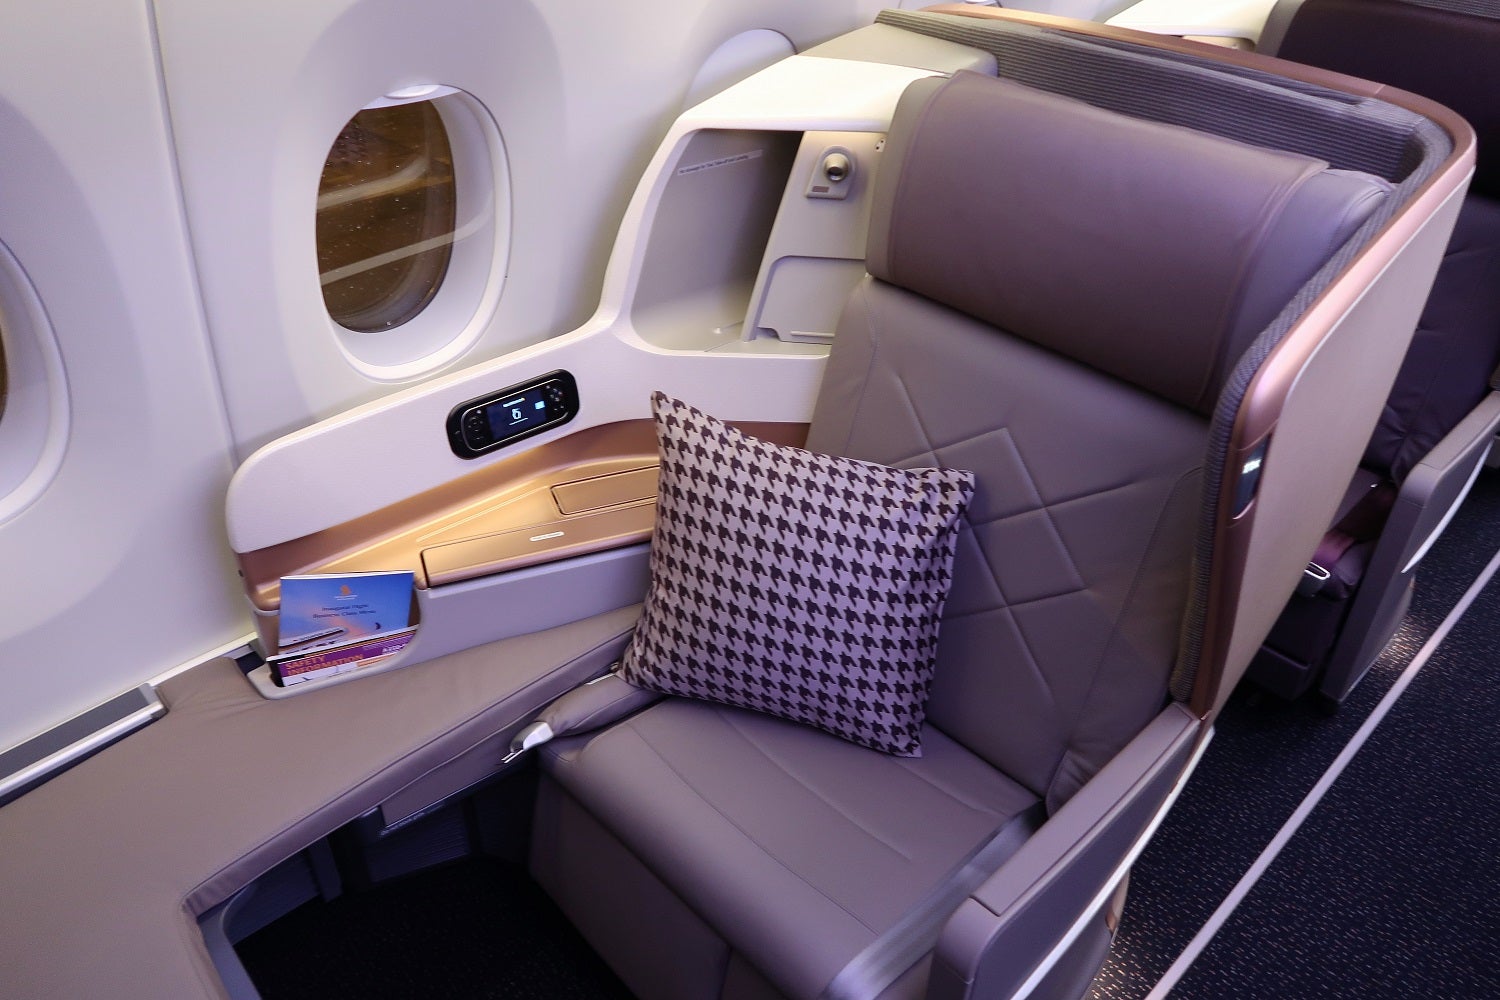 Singapore Airlines SQ22 inaugural - business class bulkhead seat